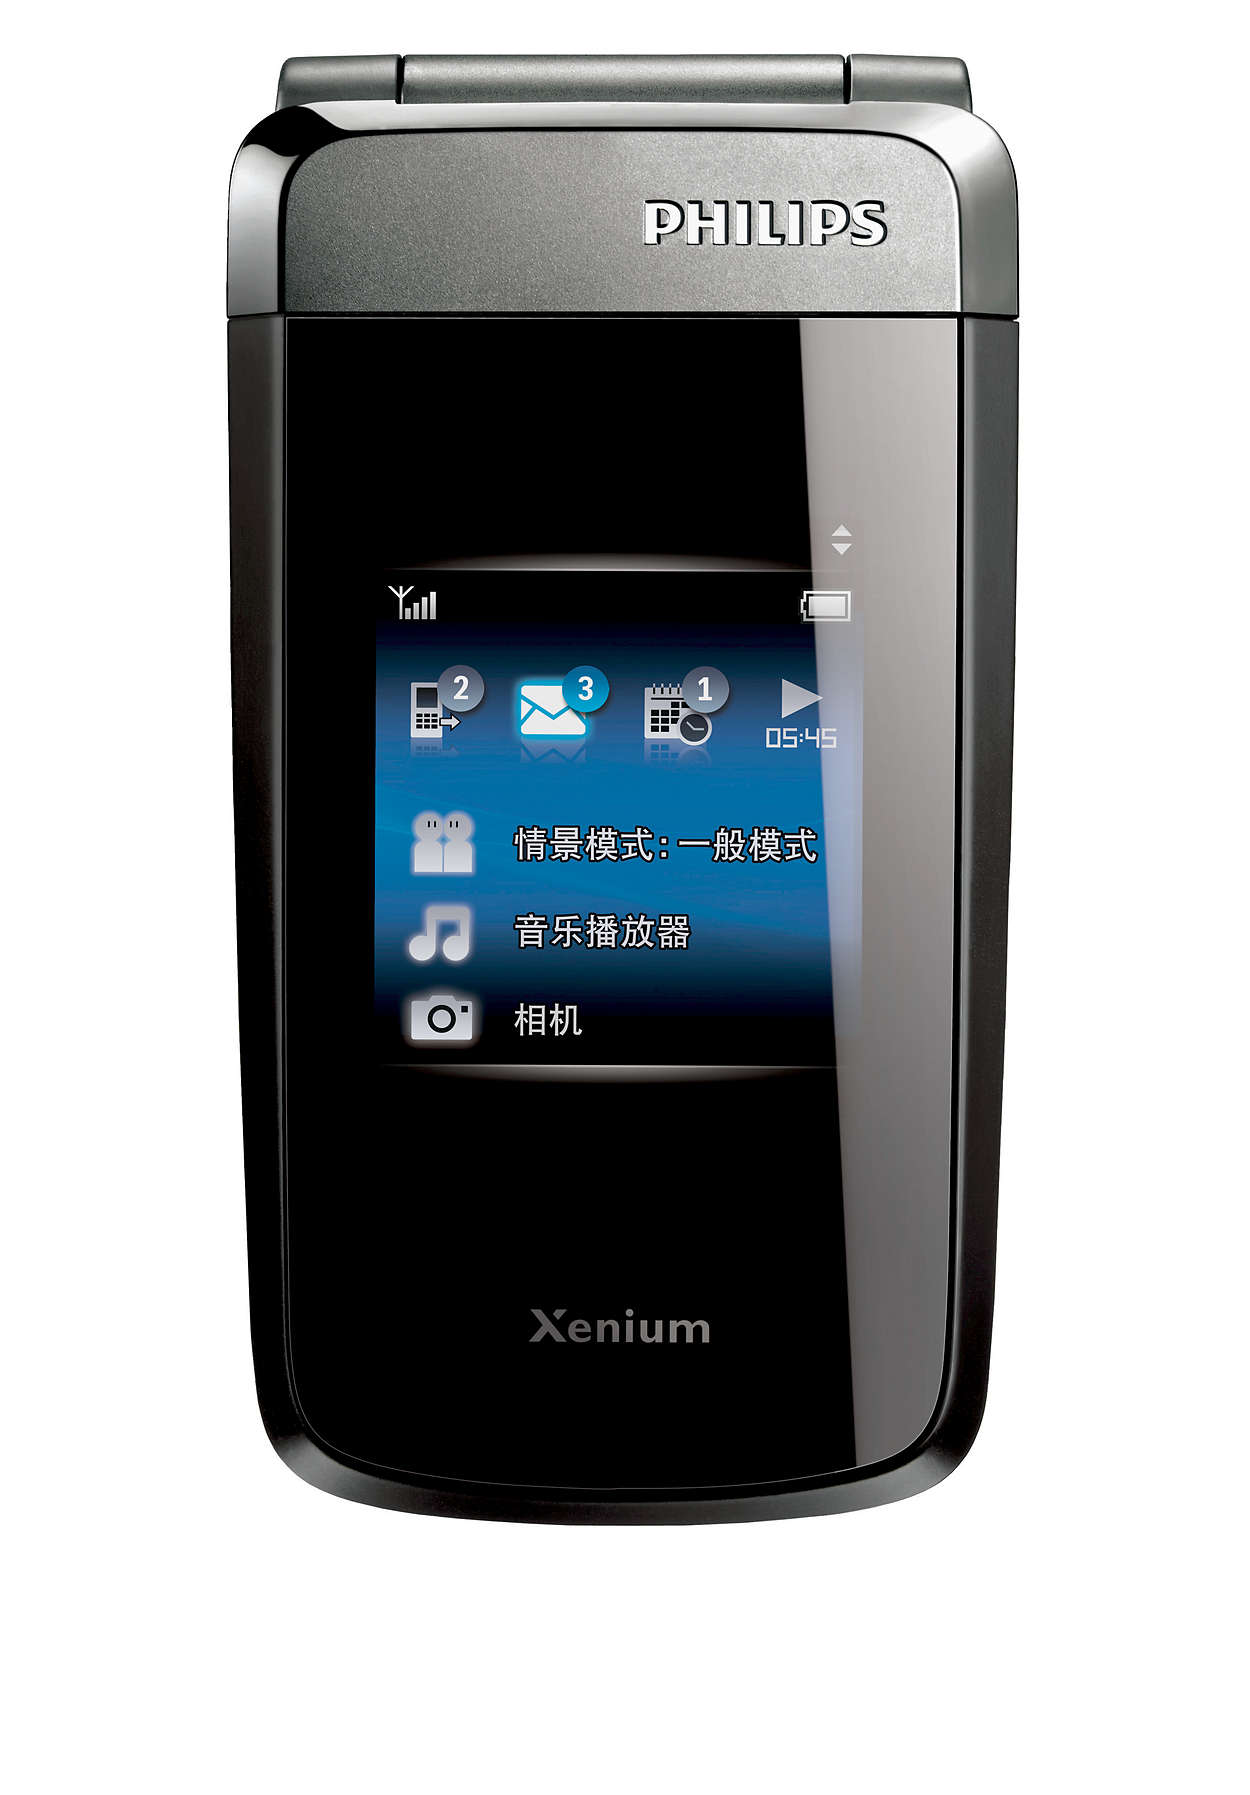 Philips xenium раскладушка. Philips Xenium x700. Раскладушка Philips Xenium x700. Телефон Филипс раскладушка с двумя экранами. Philips телефон ксениум раскладушка.